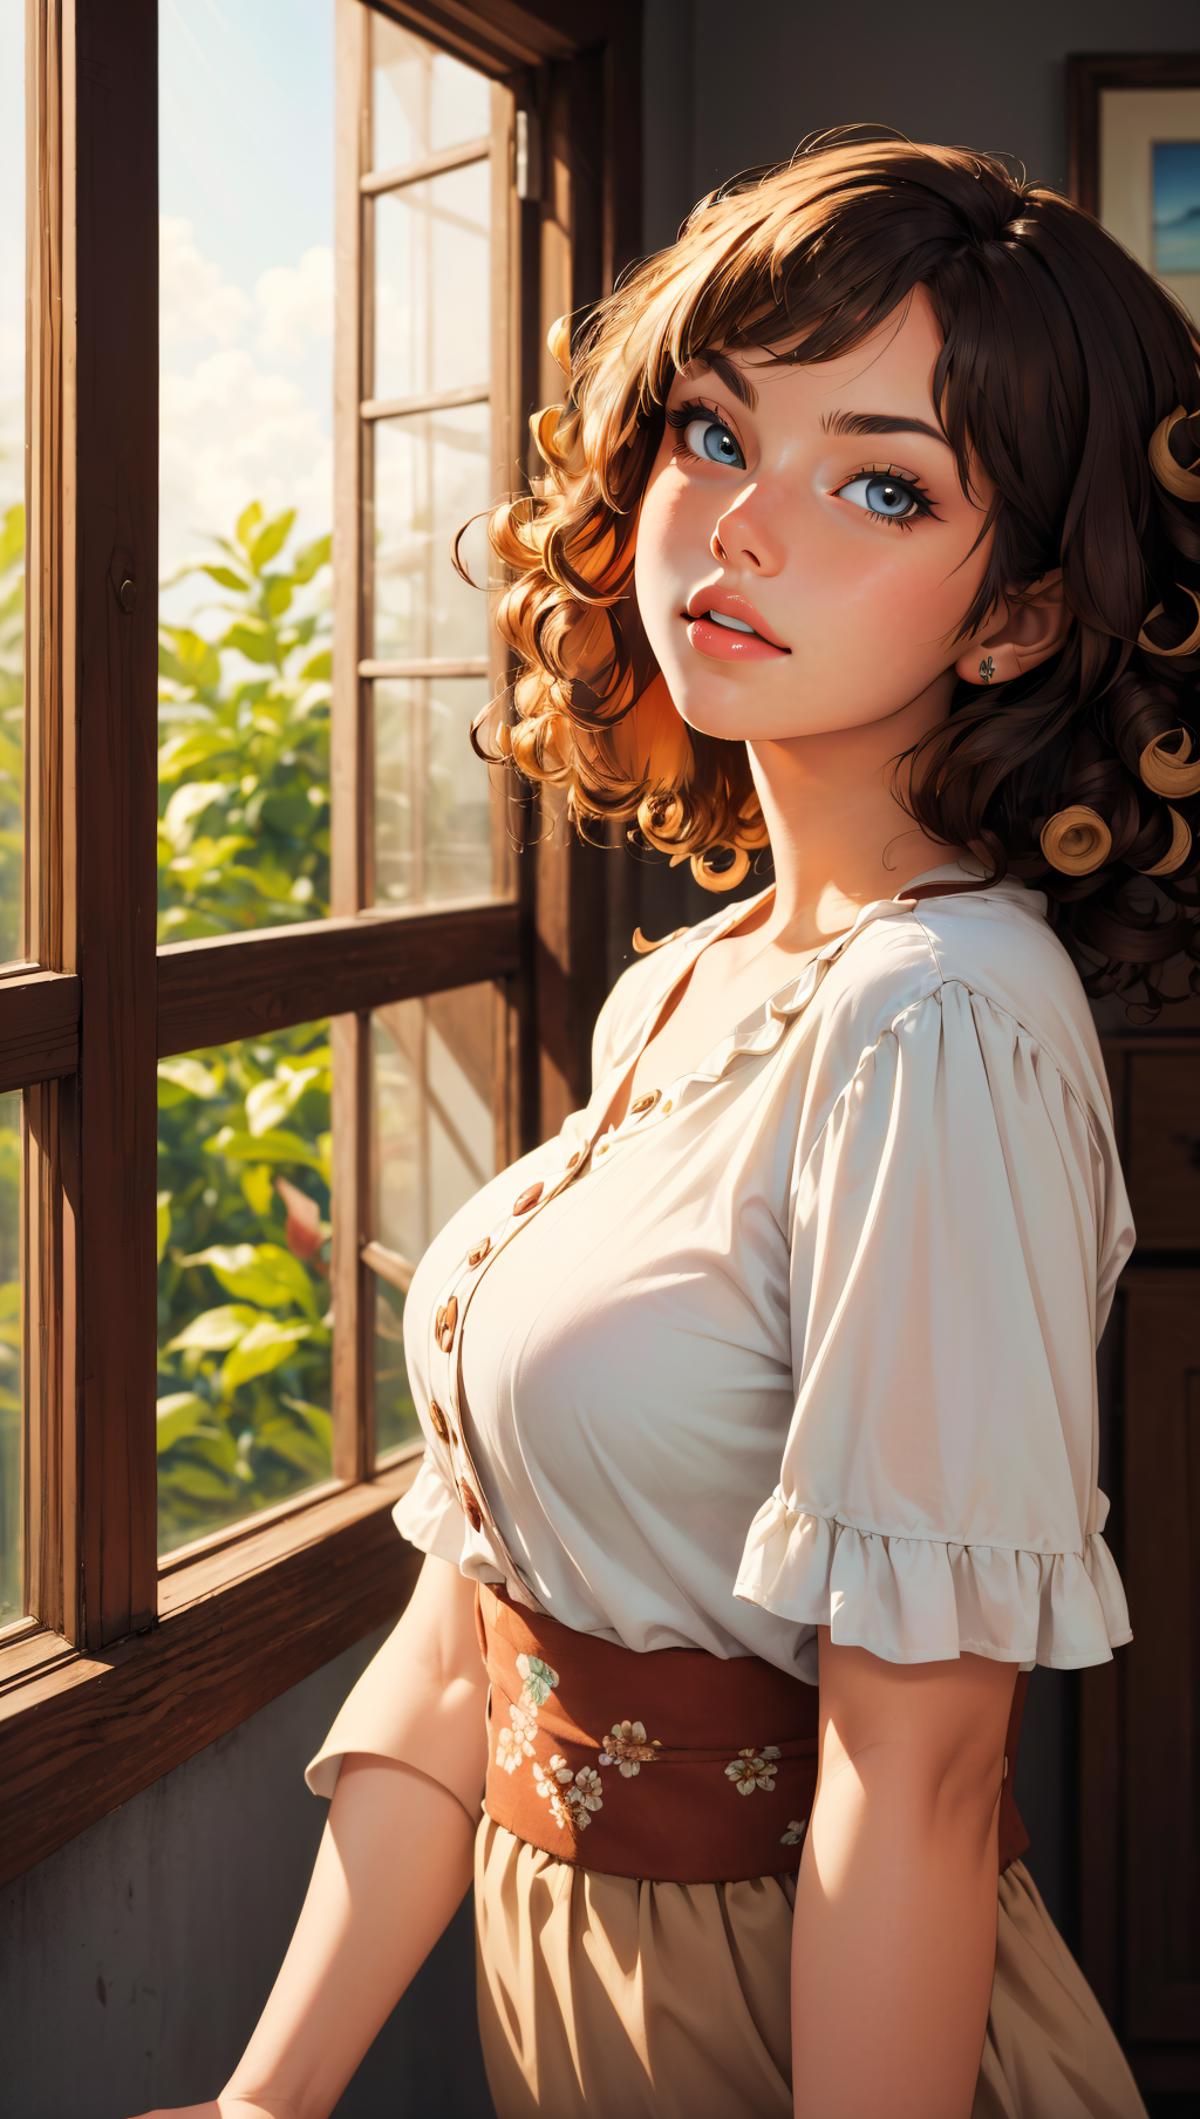 A beautiful woman with long brown hair wearing a white shirt.